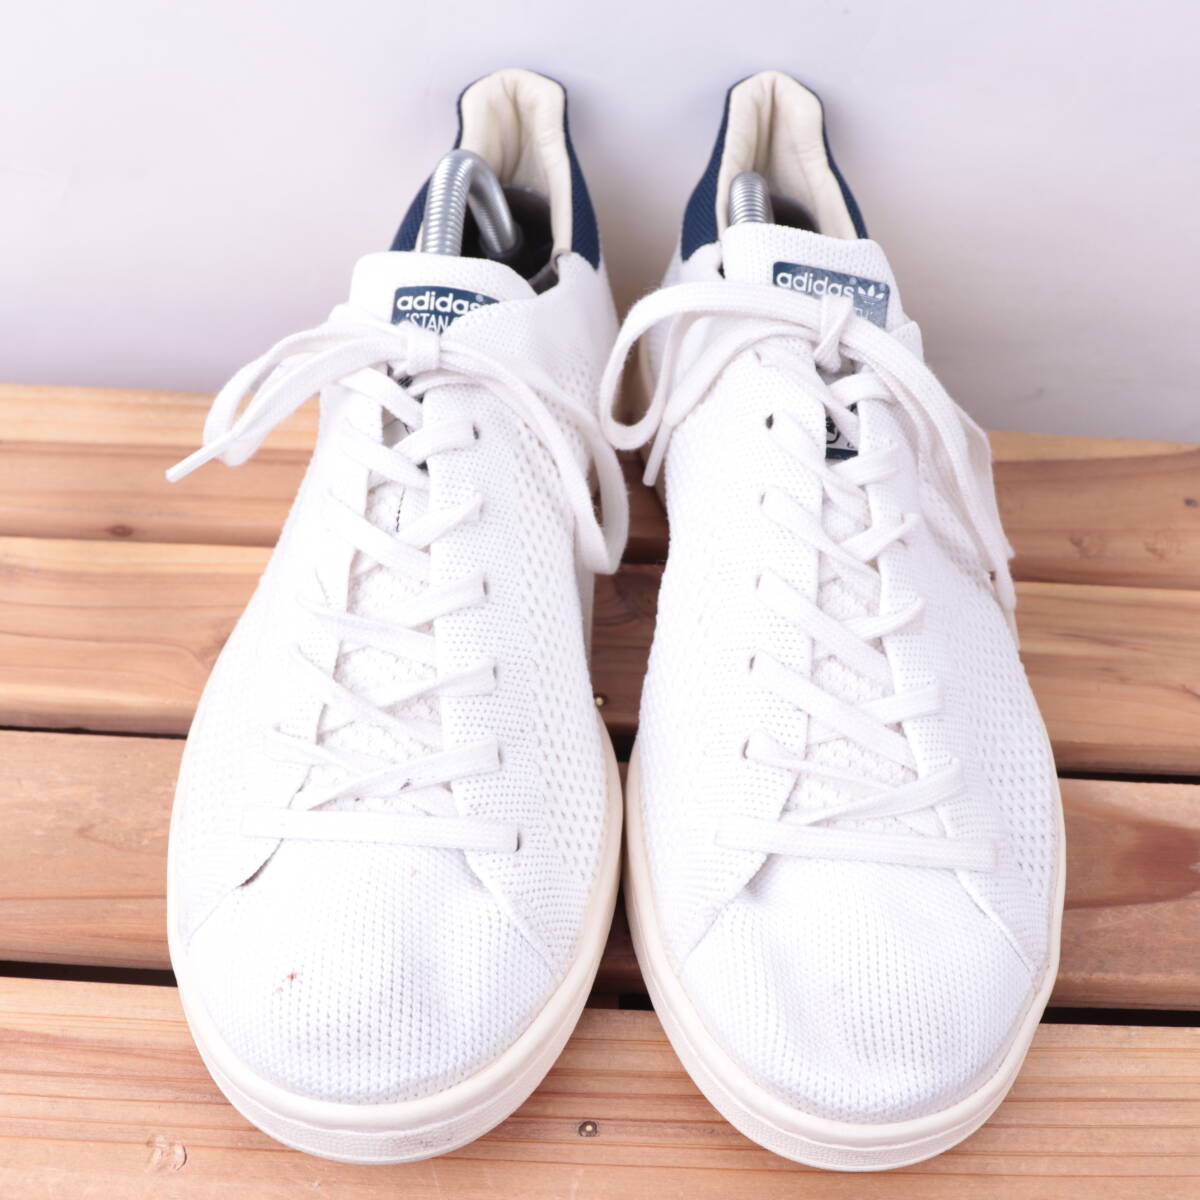 z1991 Adidas Stansmith US8 1/2 26.5cm/ white white navy blue navy adidas STANSMITH men's sneakers used 